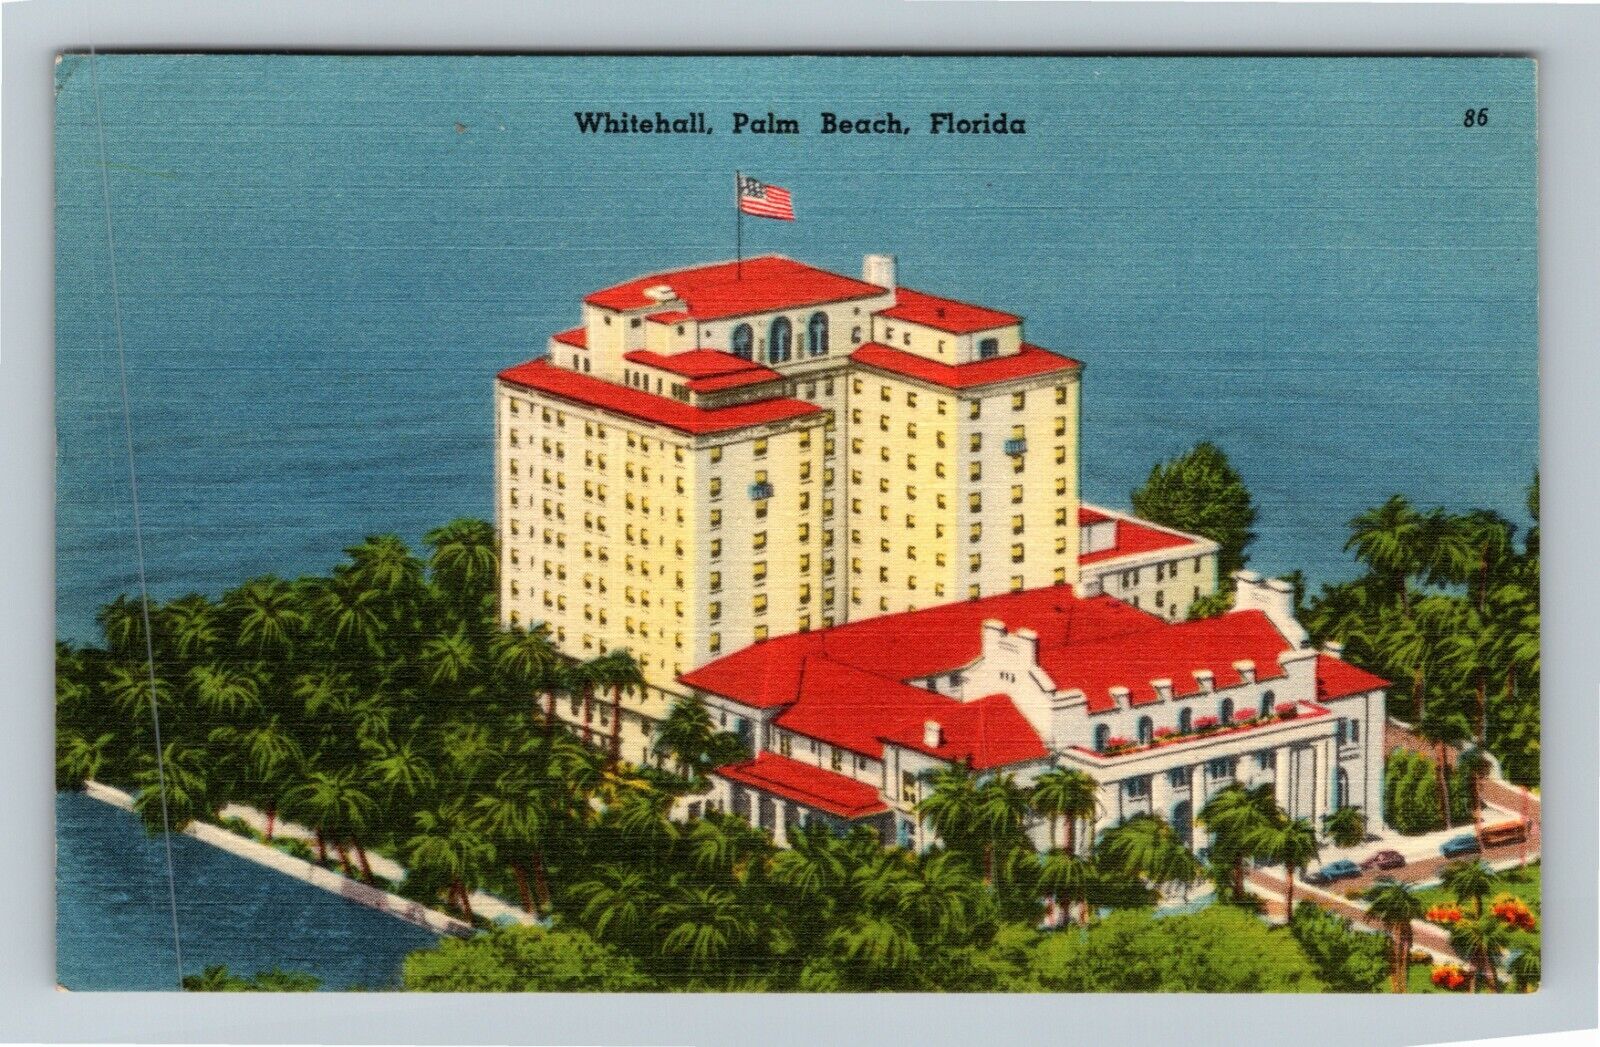 Palm Beach, Florida, WHITEHALL RESORT HOTEL, Advertising, c1958 Vintage Postcard